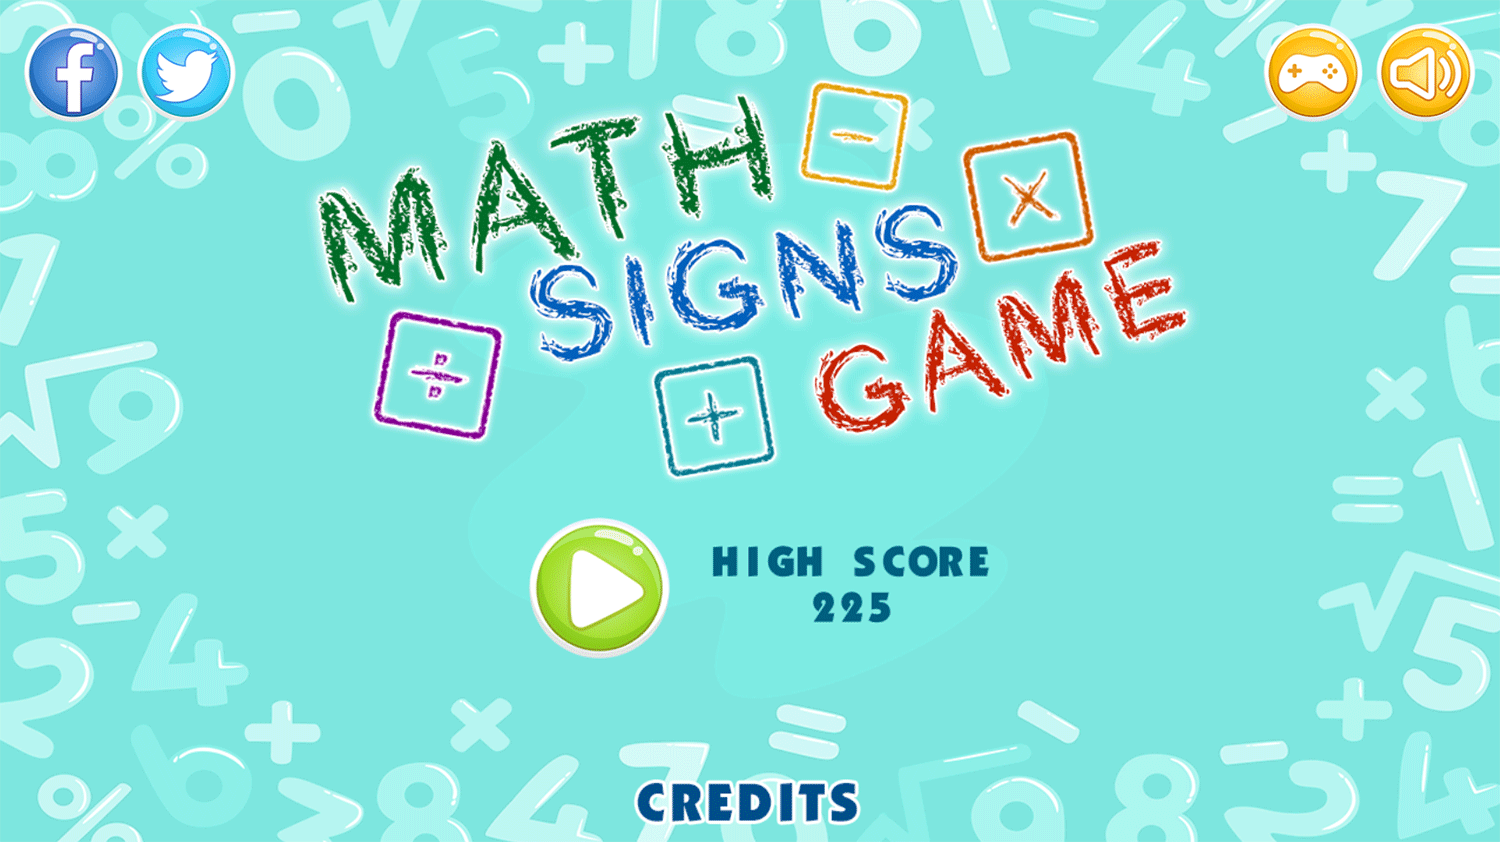 Math Signs Game Welcome Screen Screenshots.